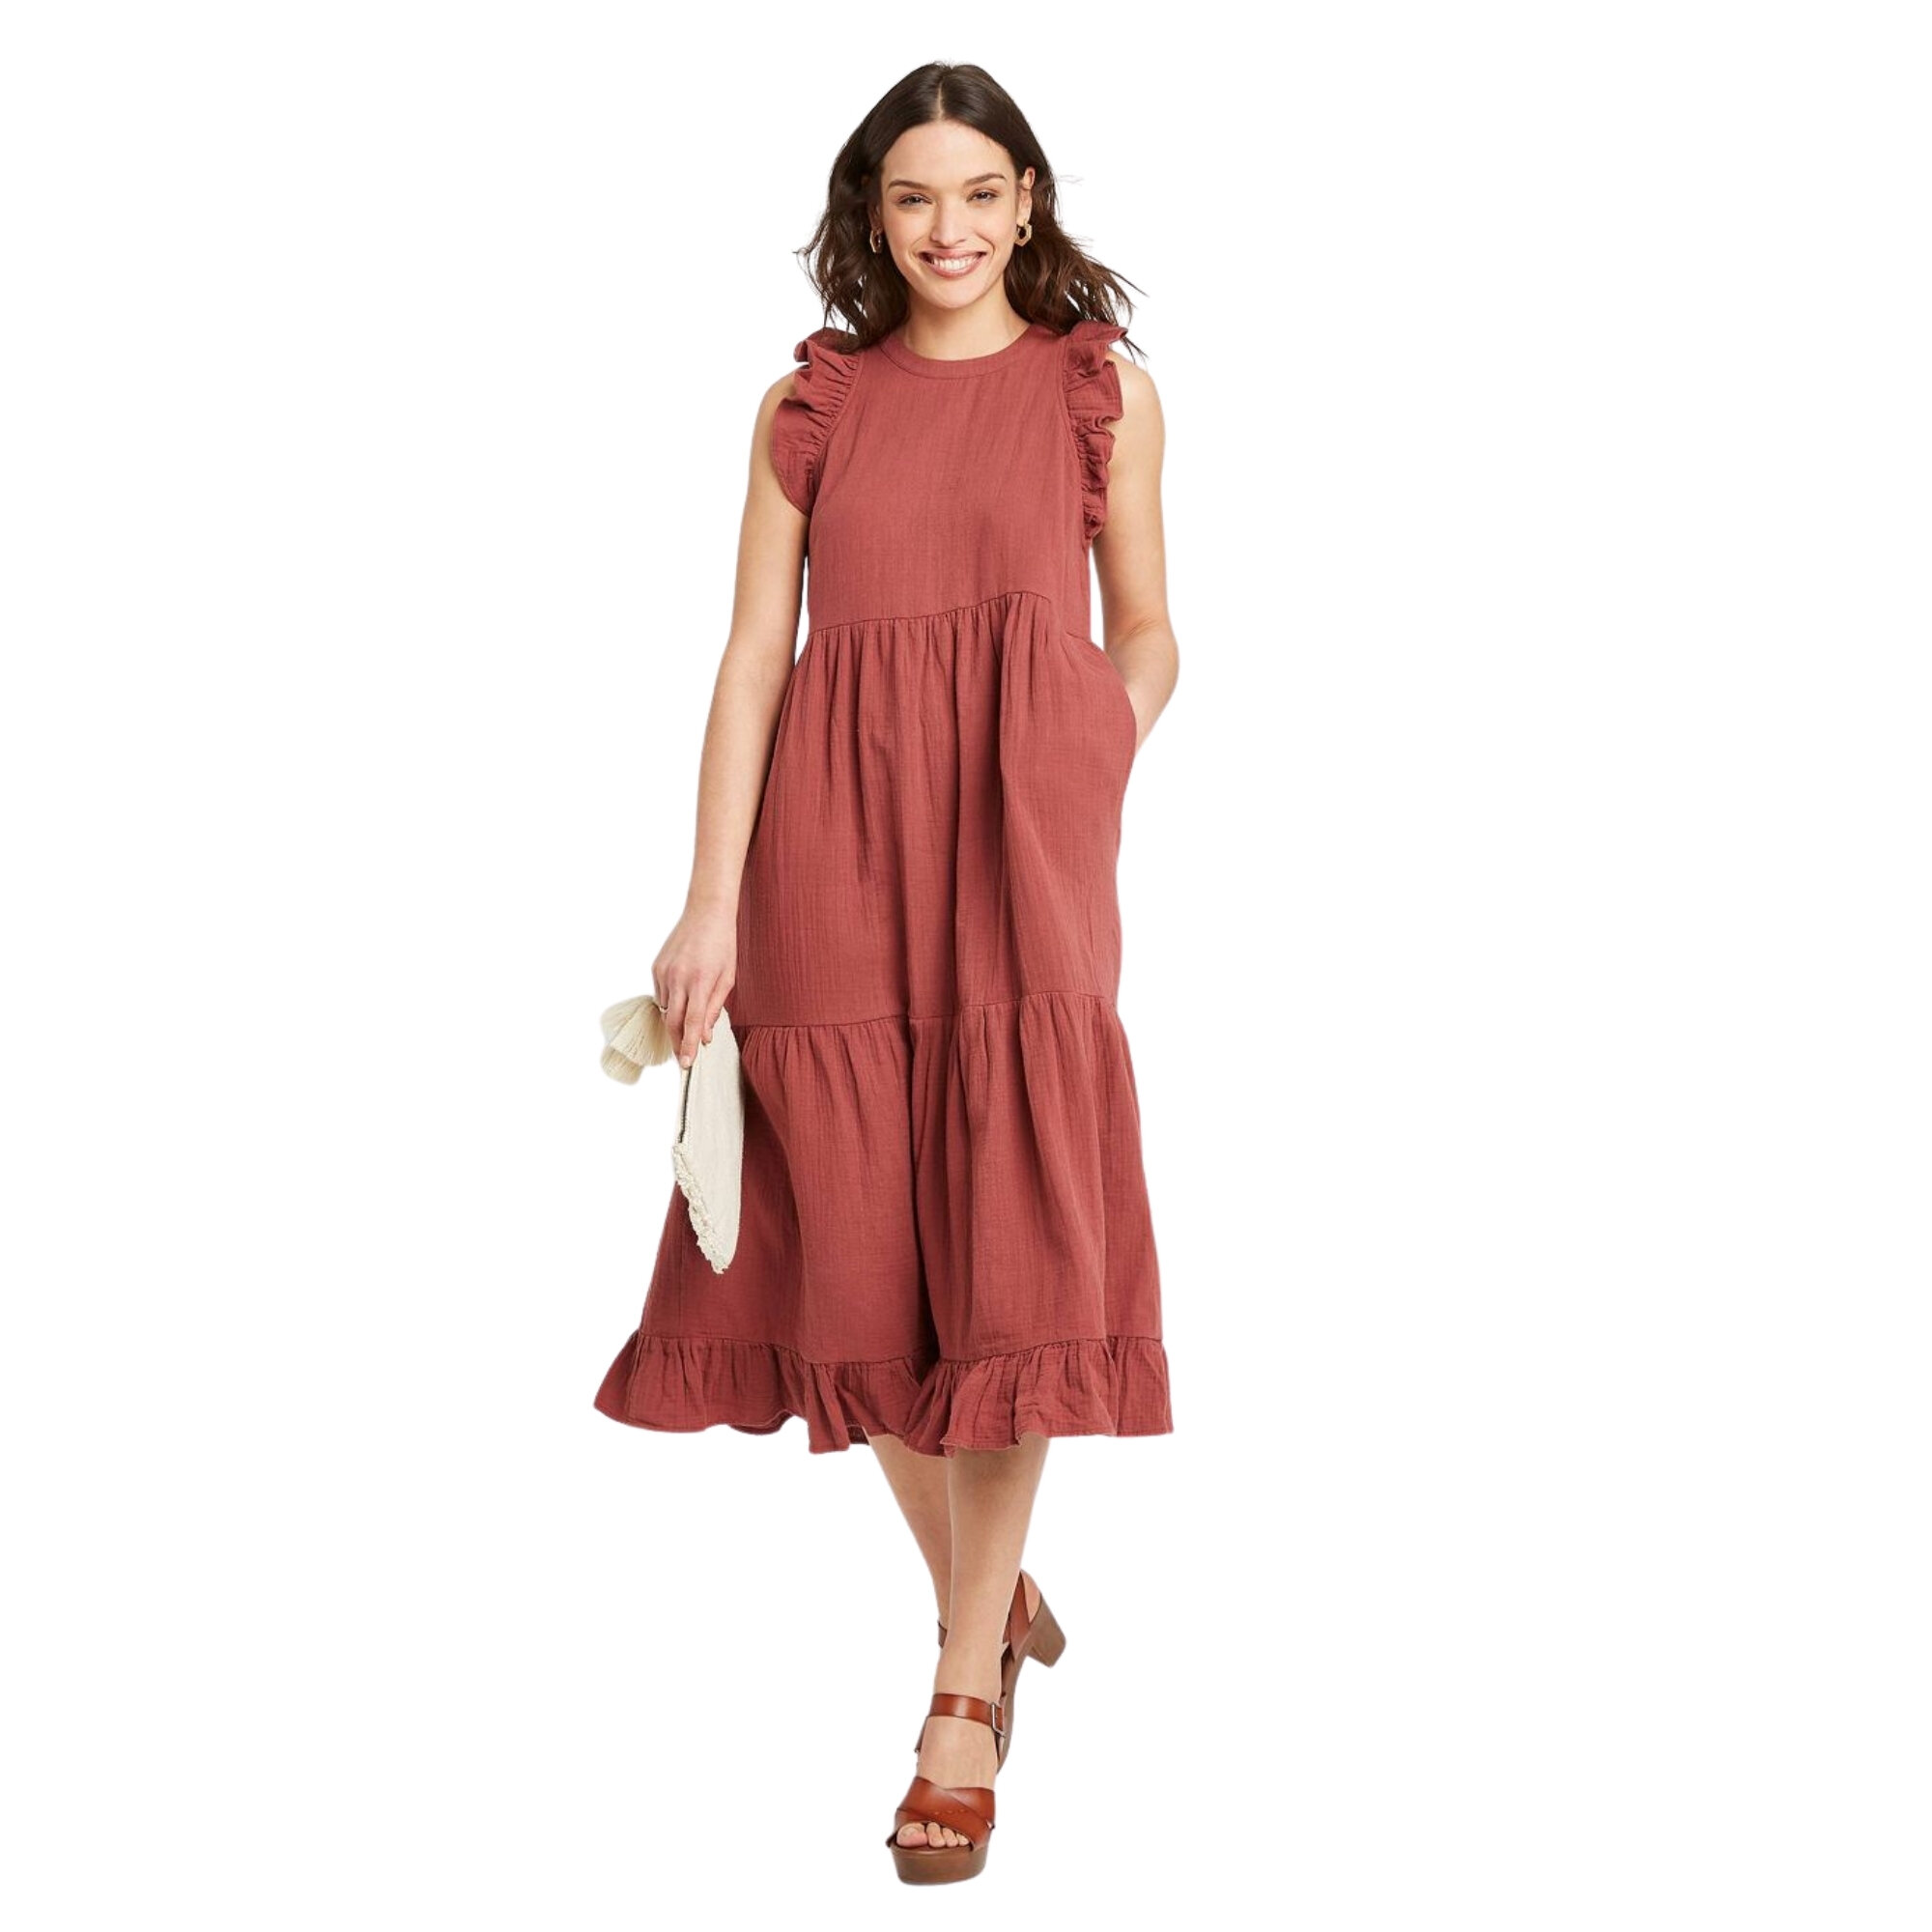 Sleeveless Tiered Ruffle Dress, Target, $24.49 (pockets, machine wash)